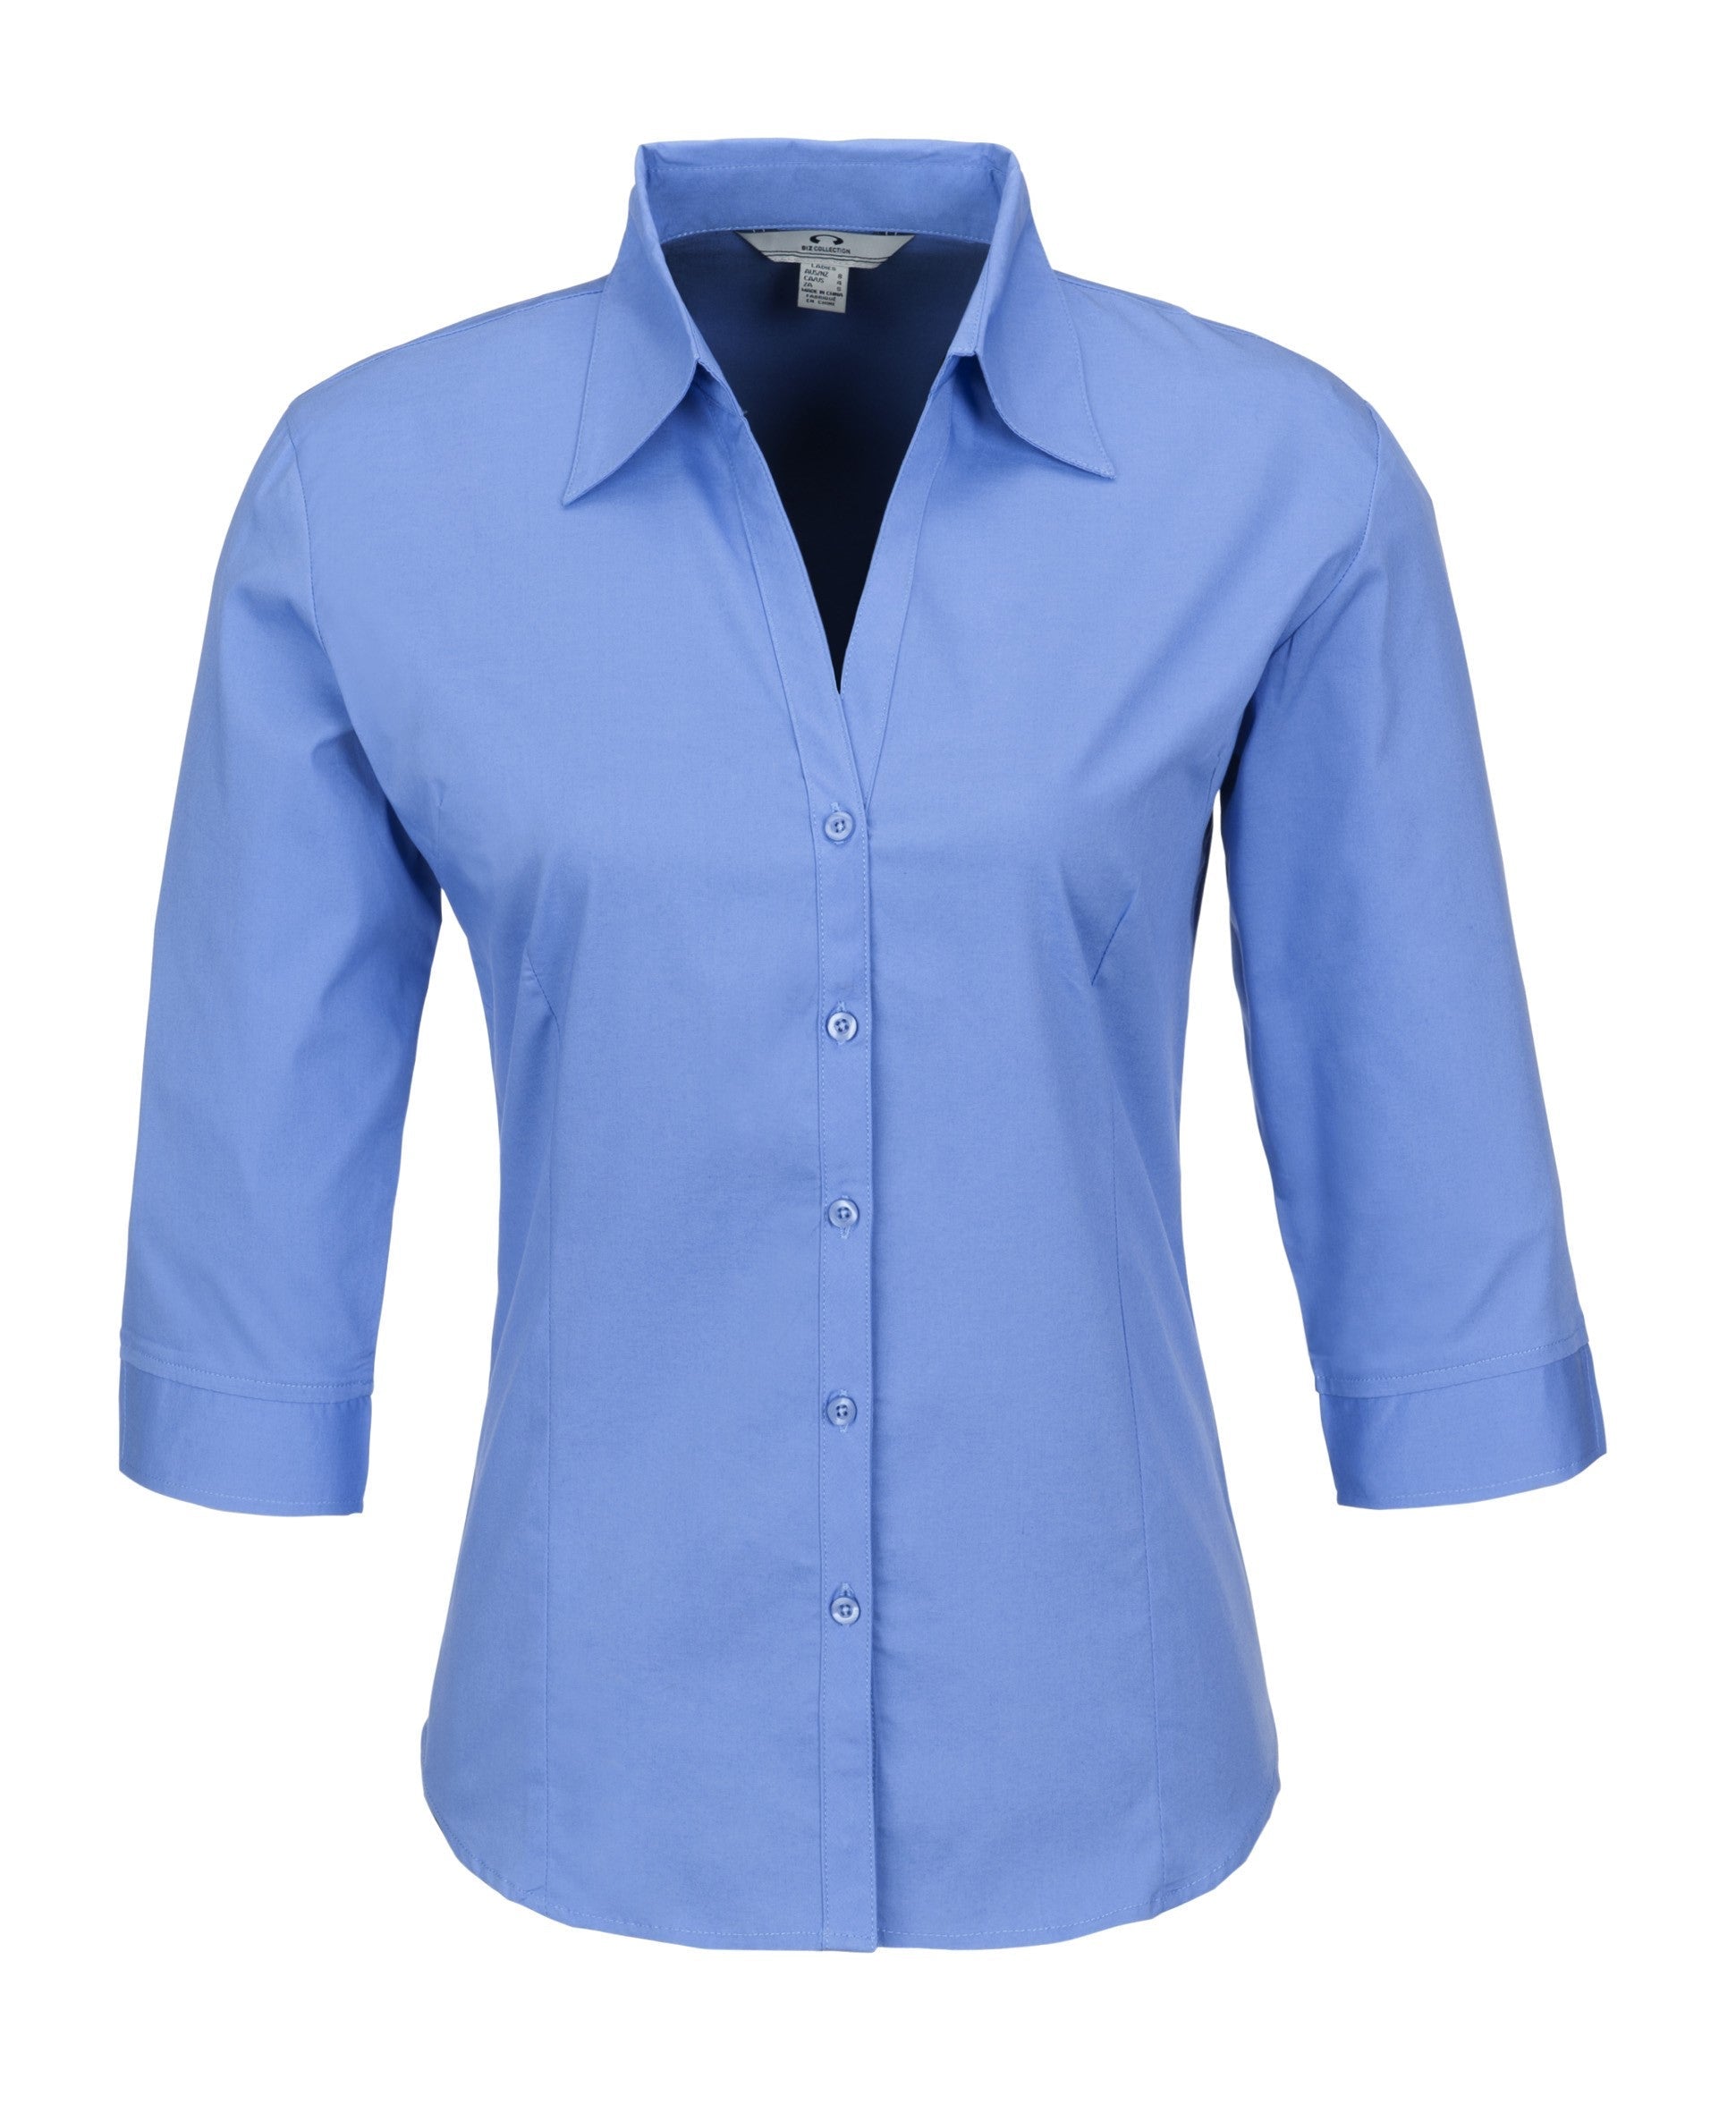 Ladies 3/4 Sleeve Metro Shirt - Black Only-2XL-Blue-BU